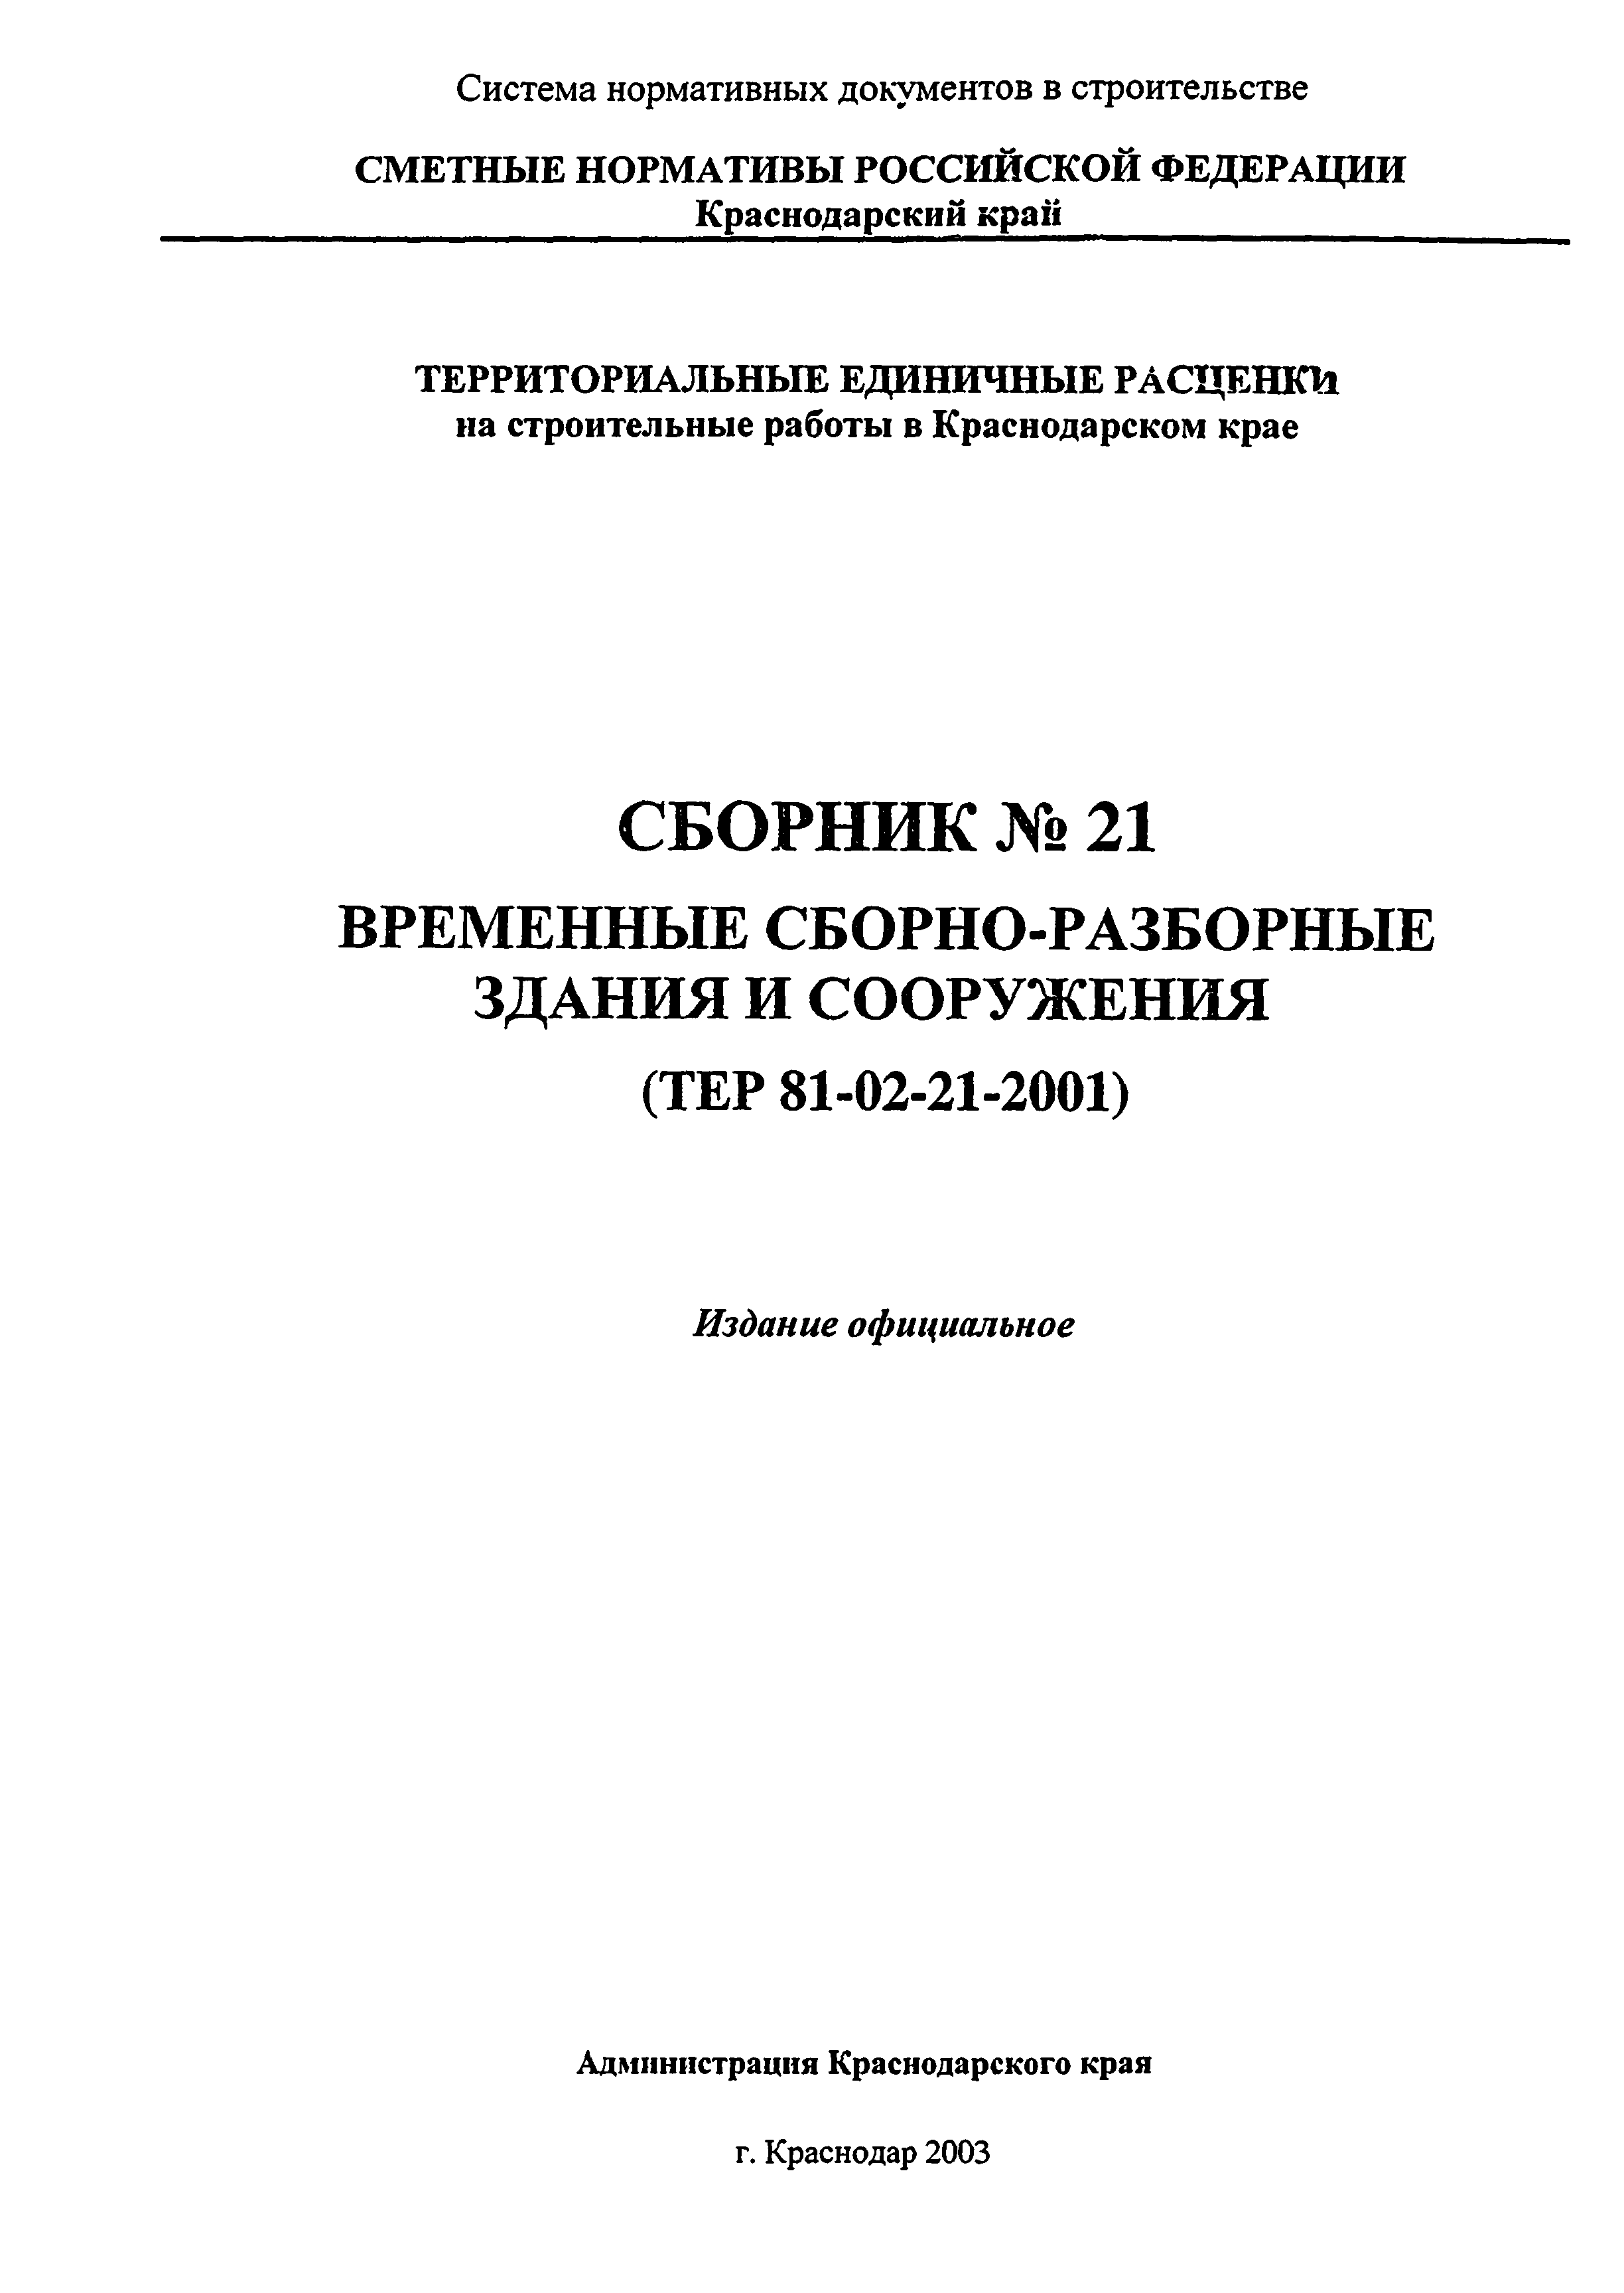 ТЕР Краснодарский край 2001-21